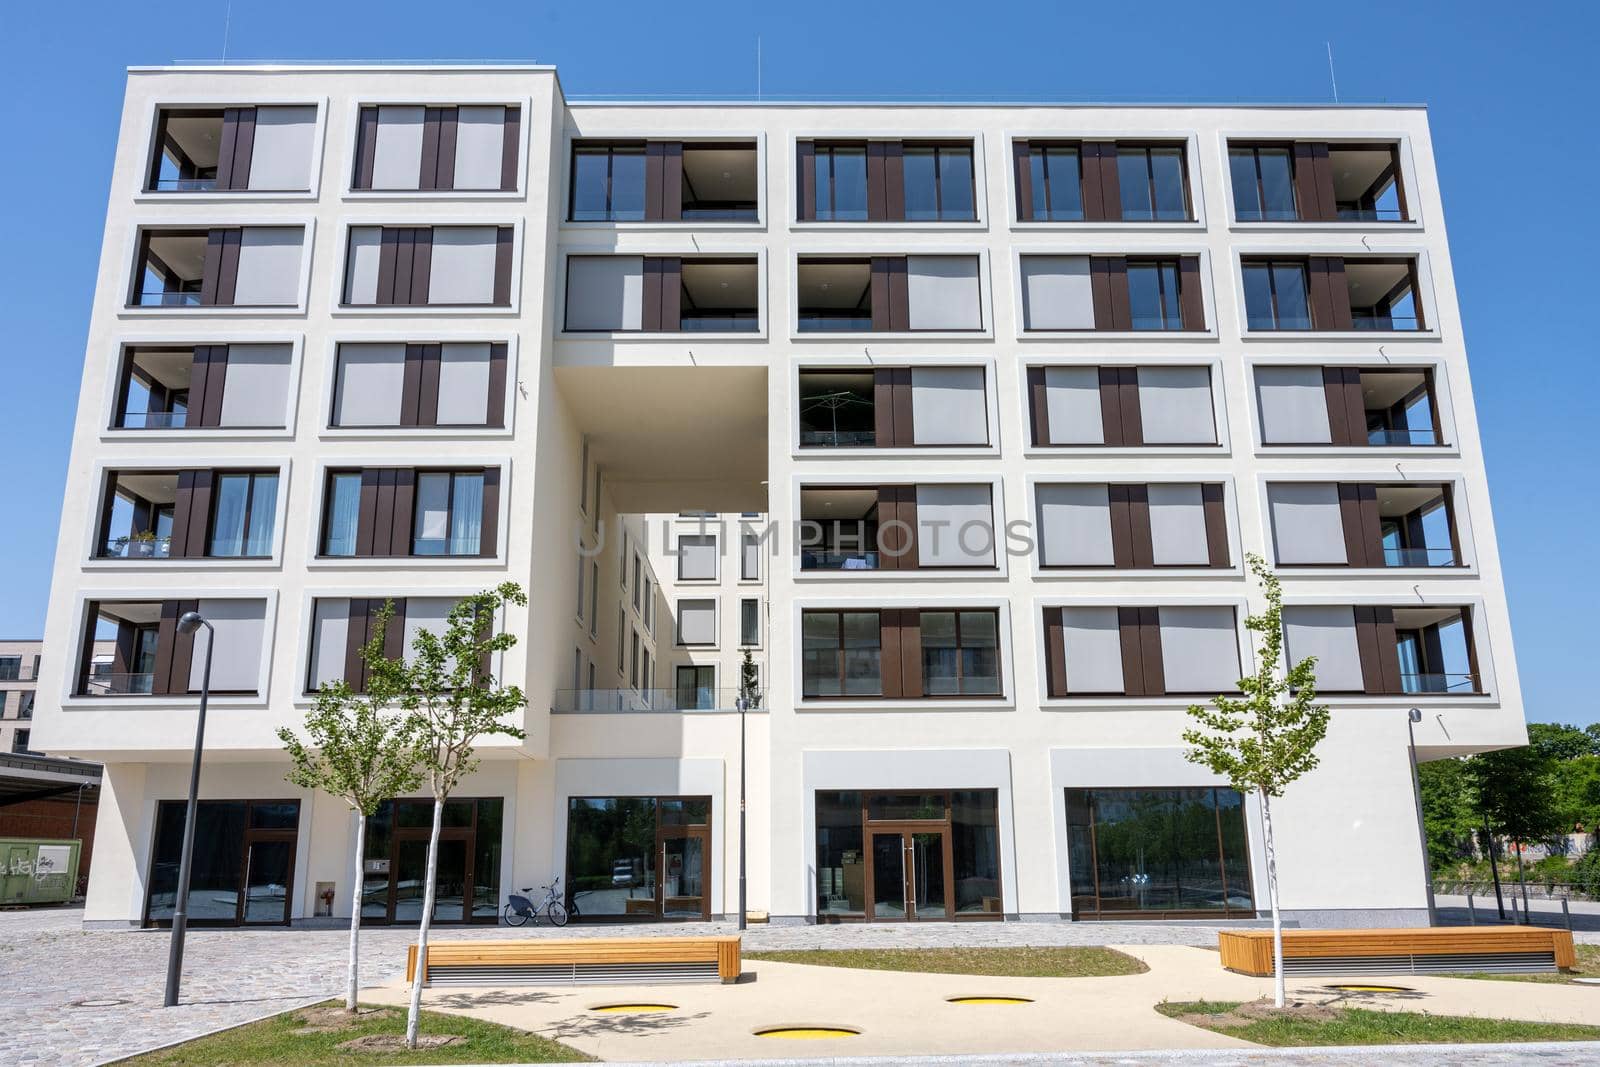 Modern apartment building in a housing development area by elxeneize